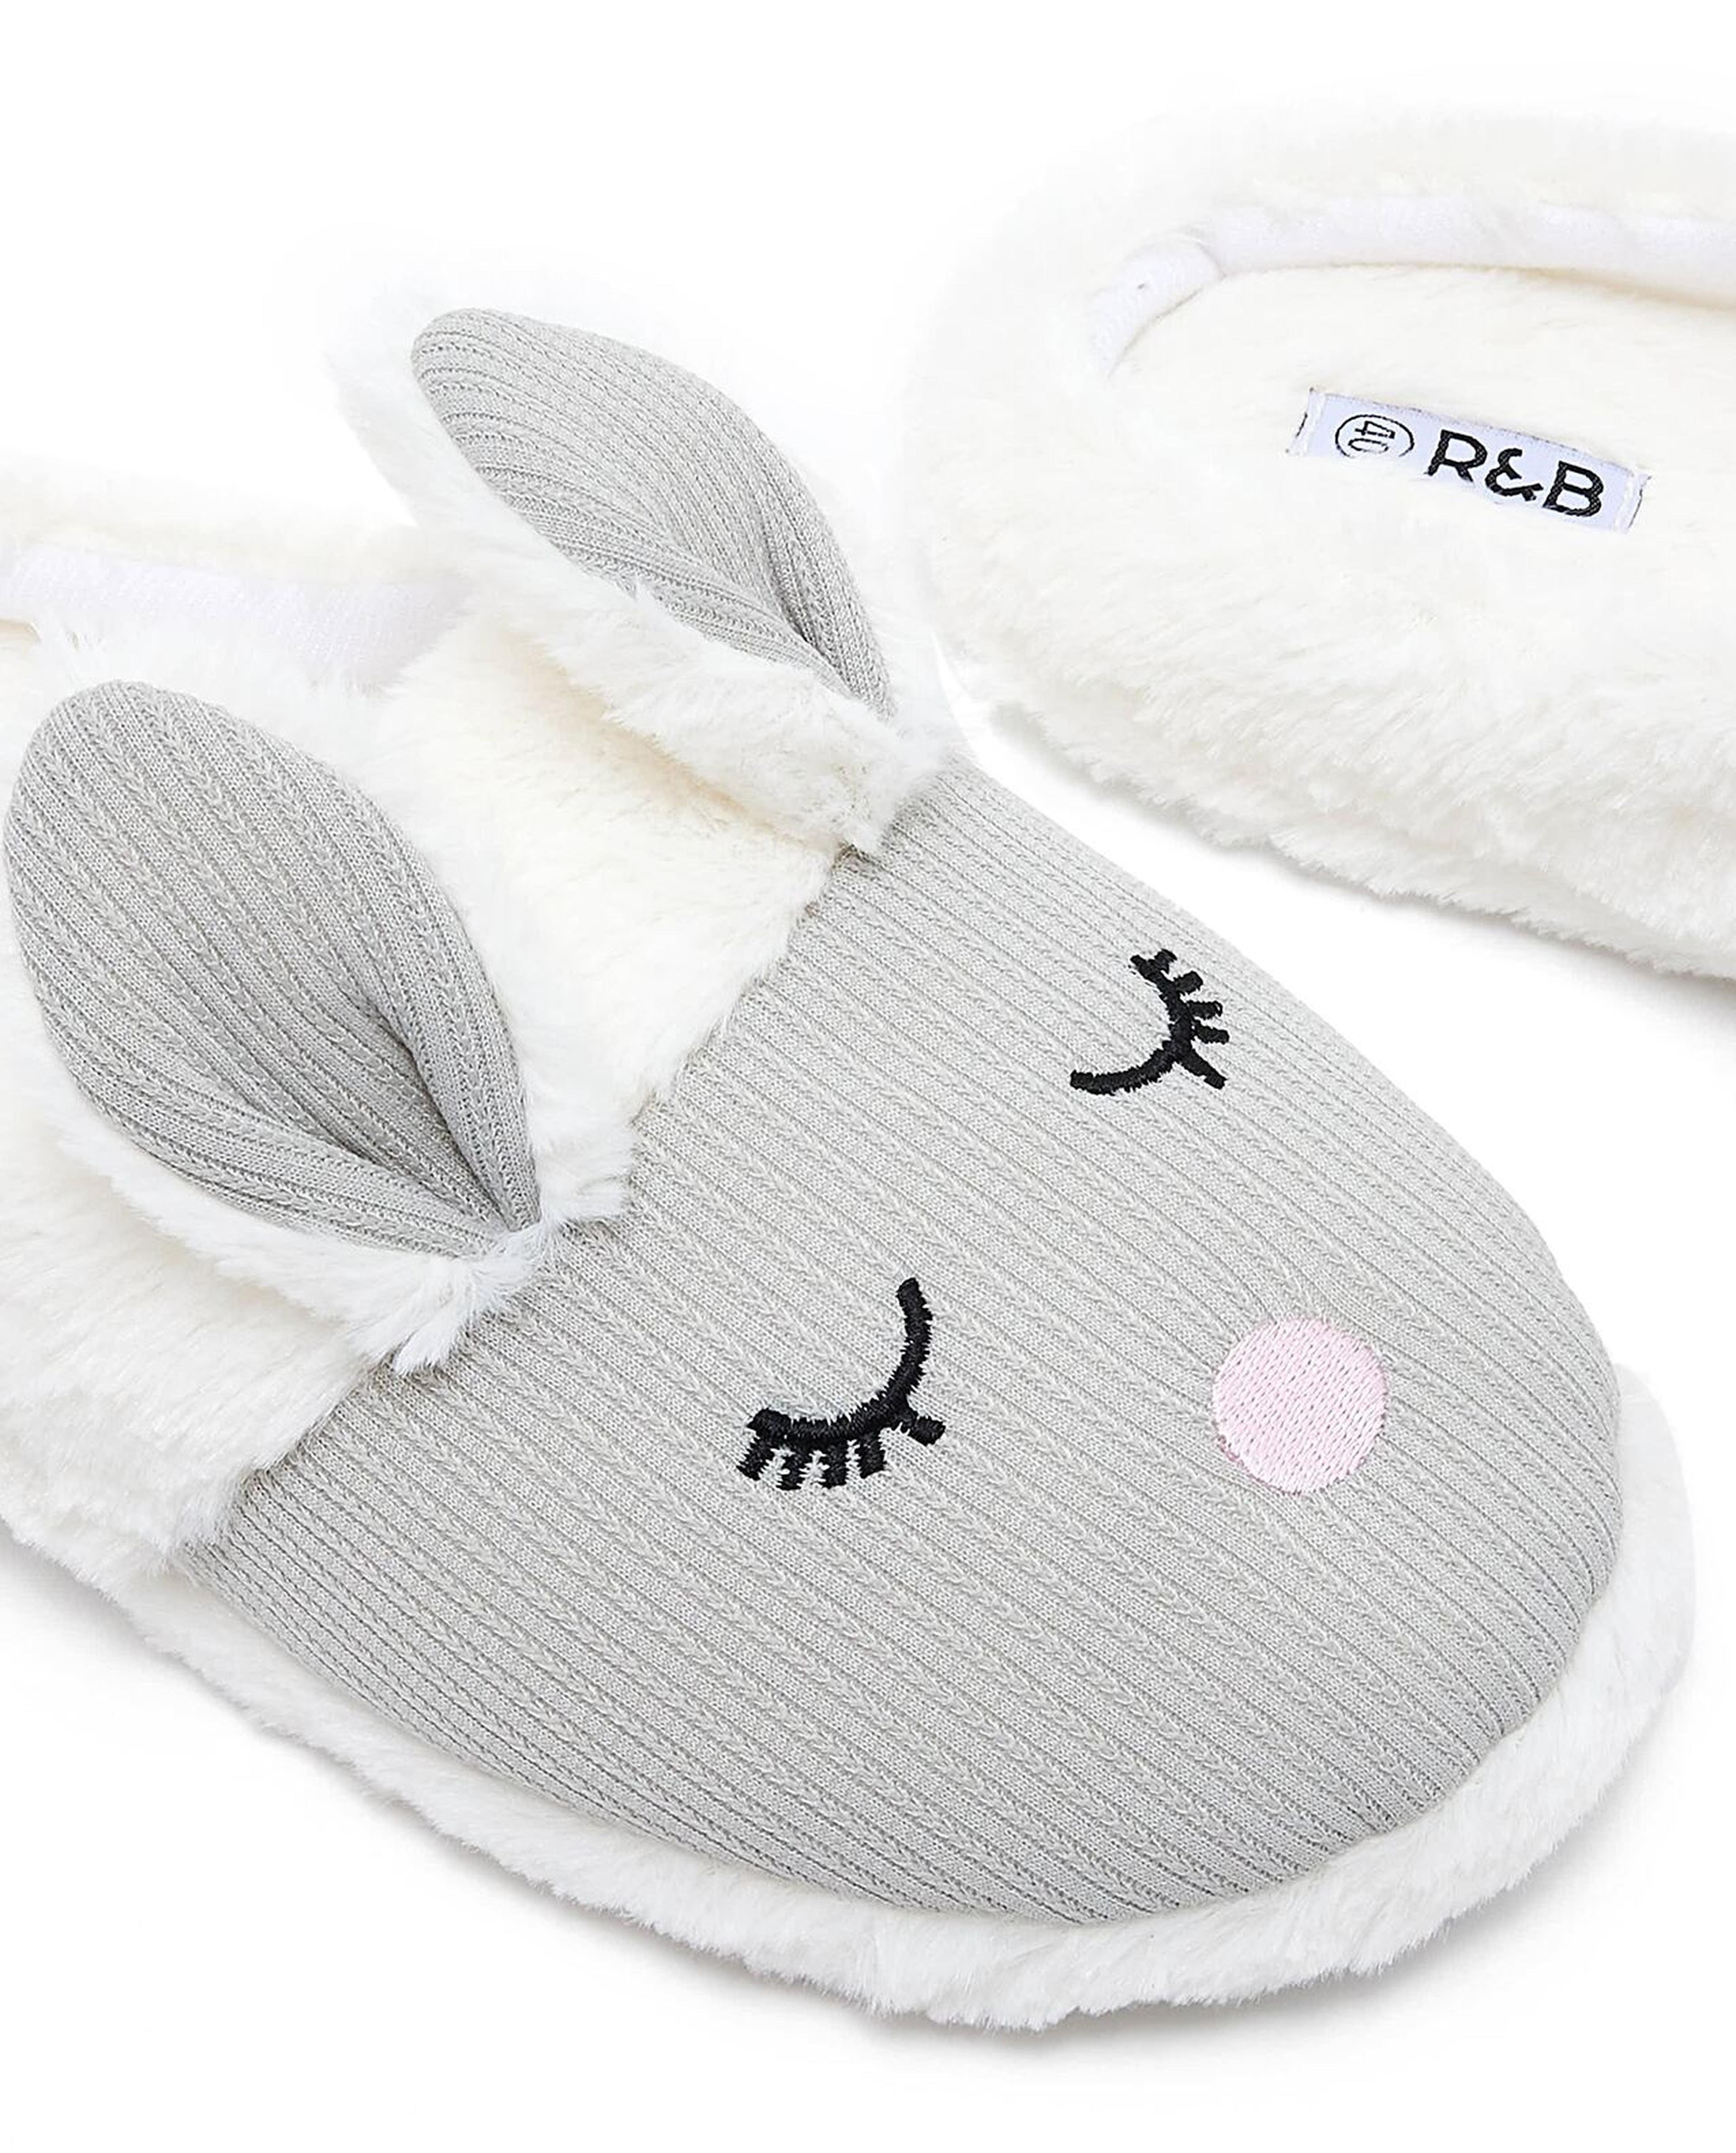 Bunny Detail Bedroom Slippers